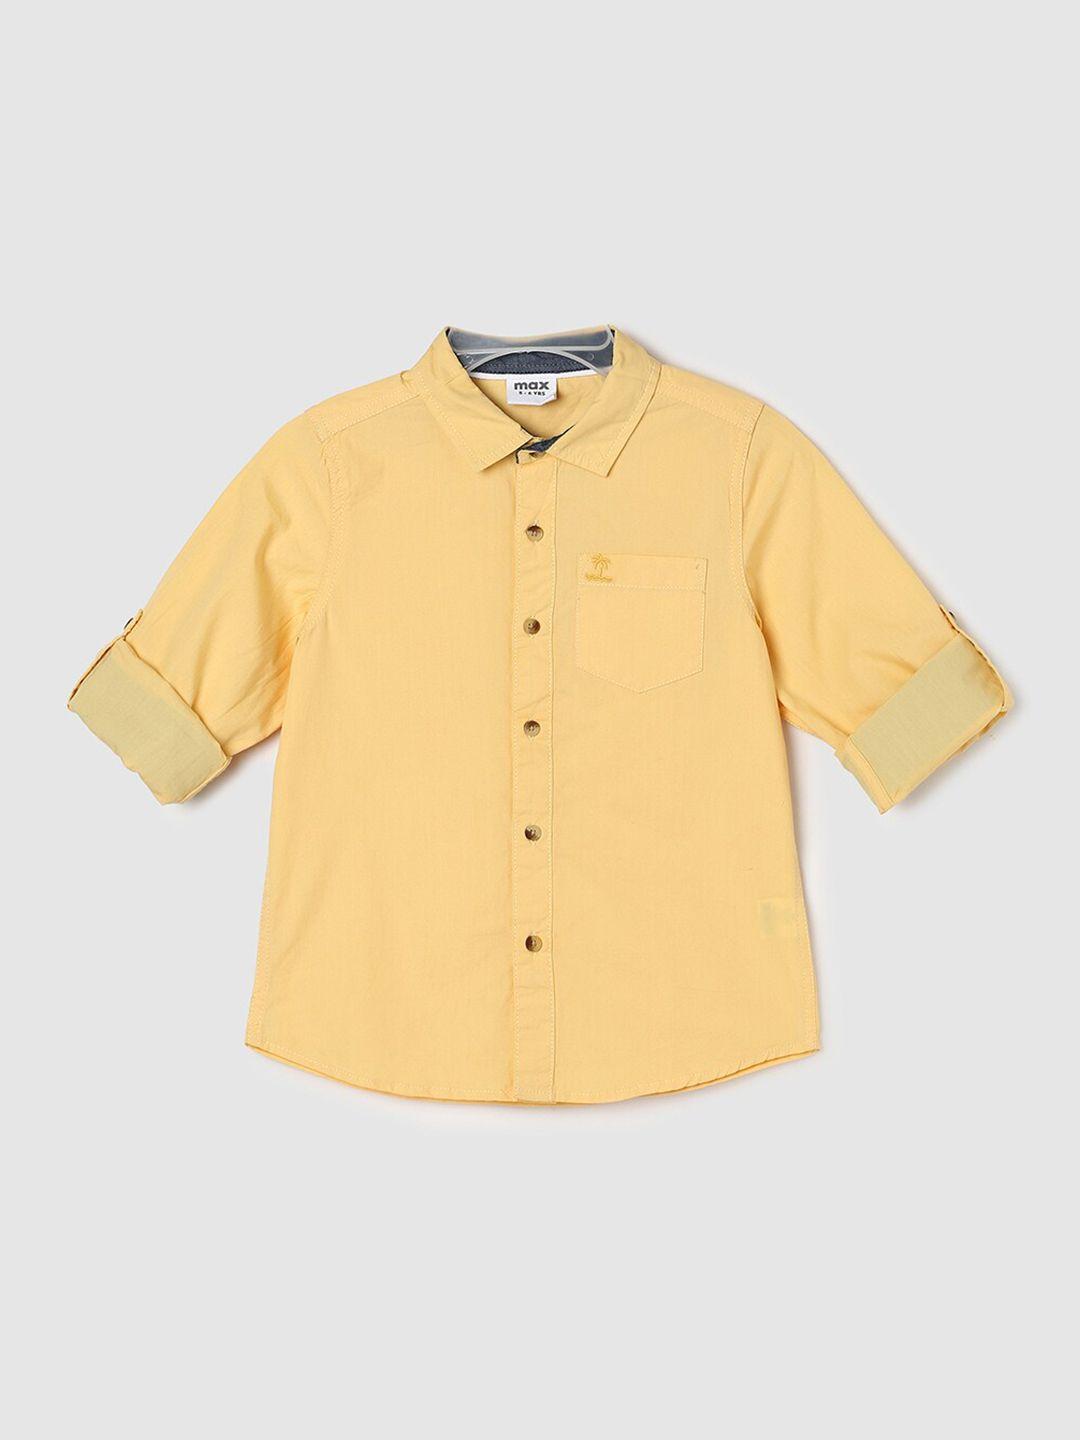 max Boys Opaque Pure Cotton Casual Shirt